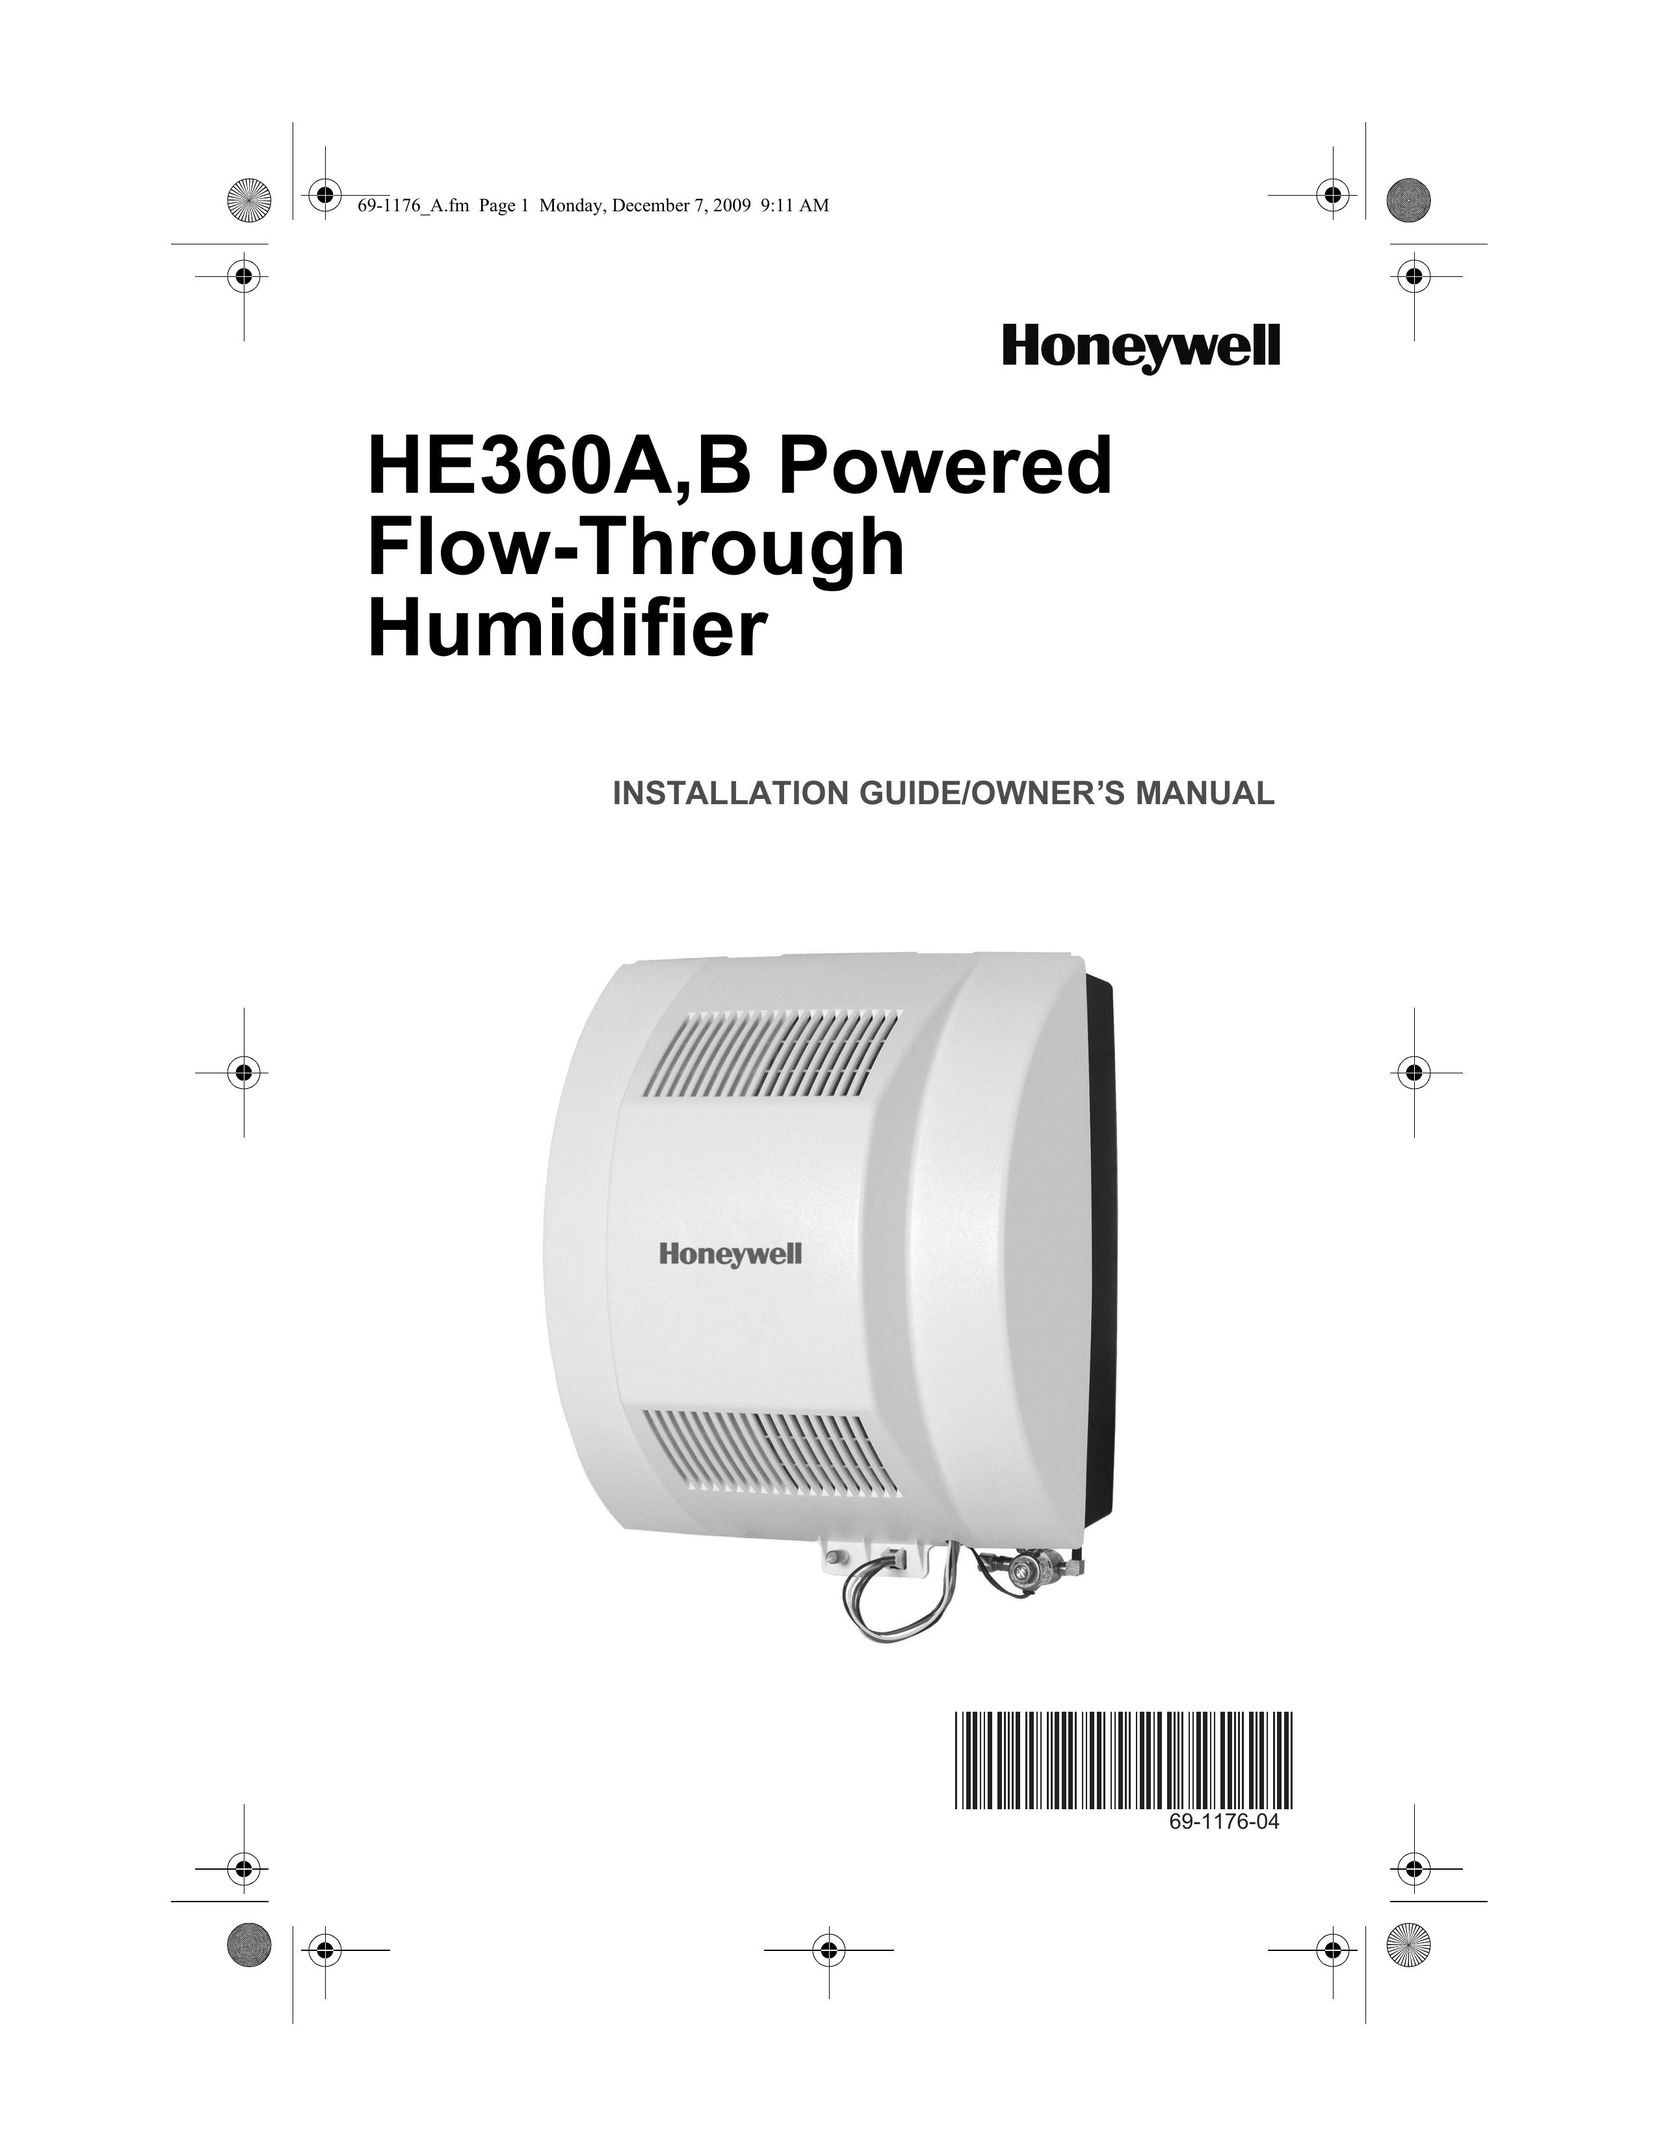 Honeywell HE360A Humidifier User Manual